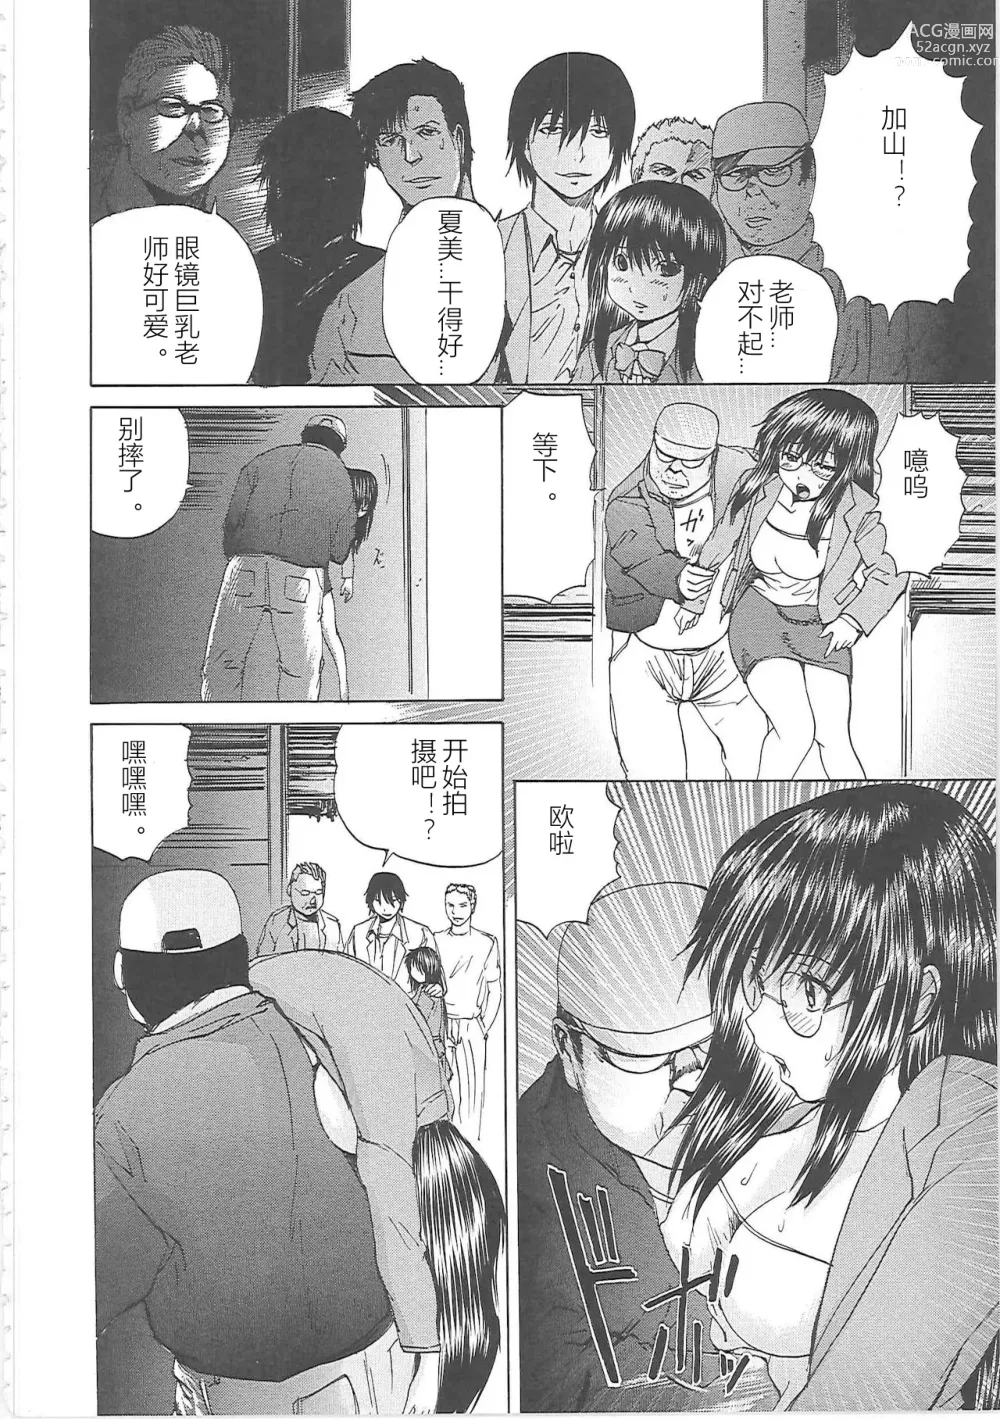 Page 9 of manga Bakkinkei